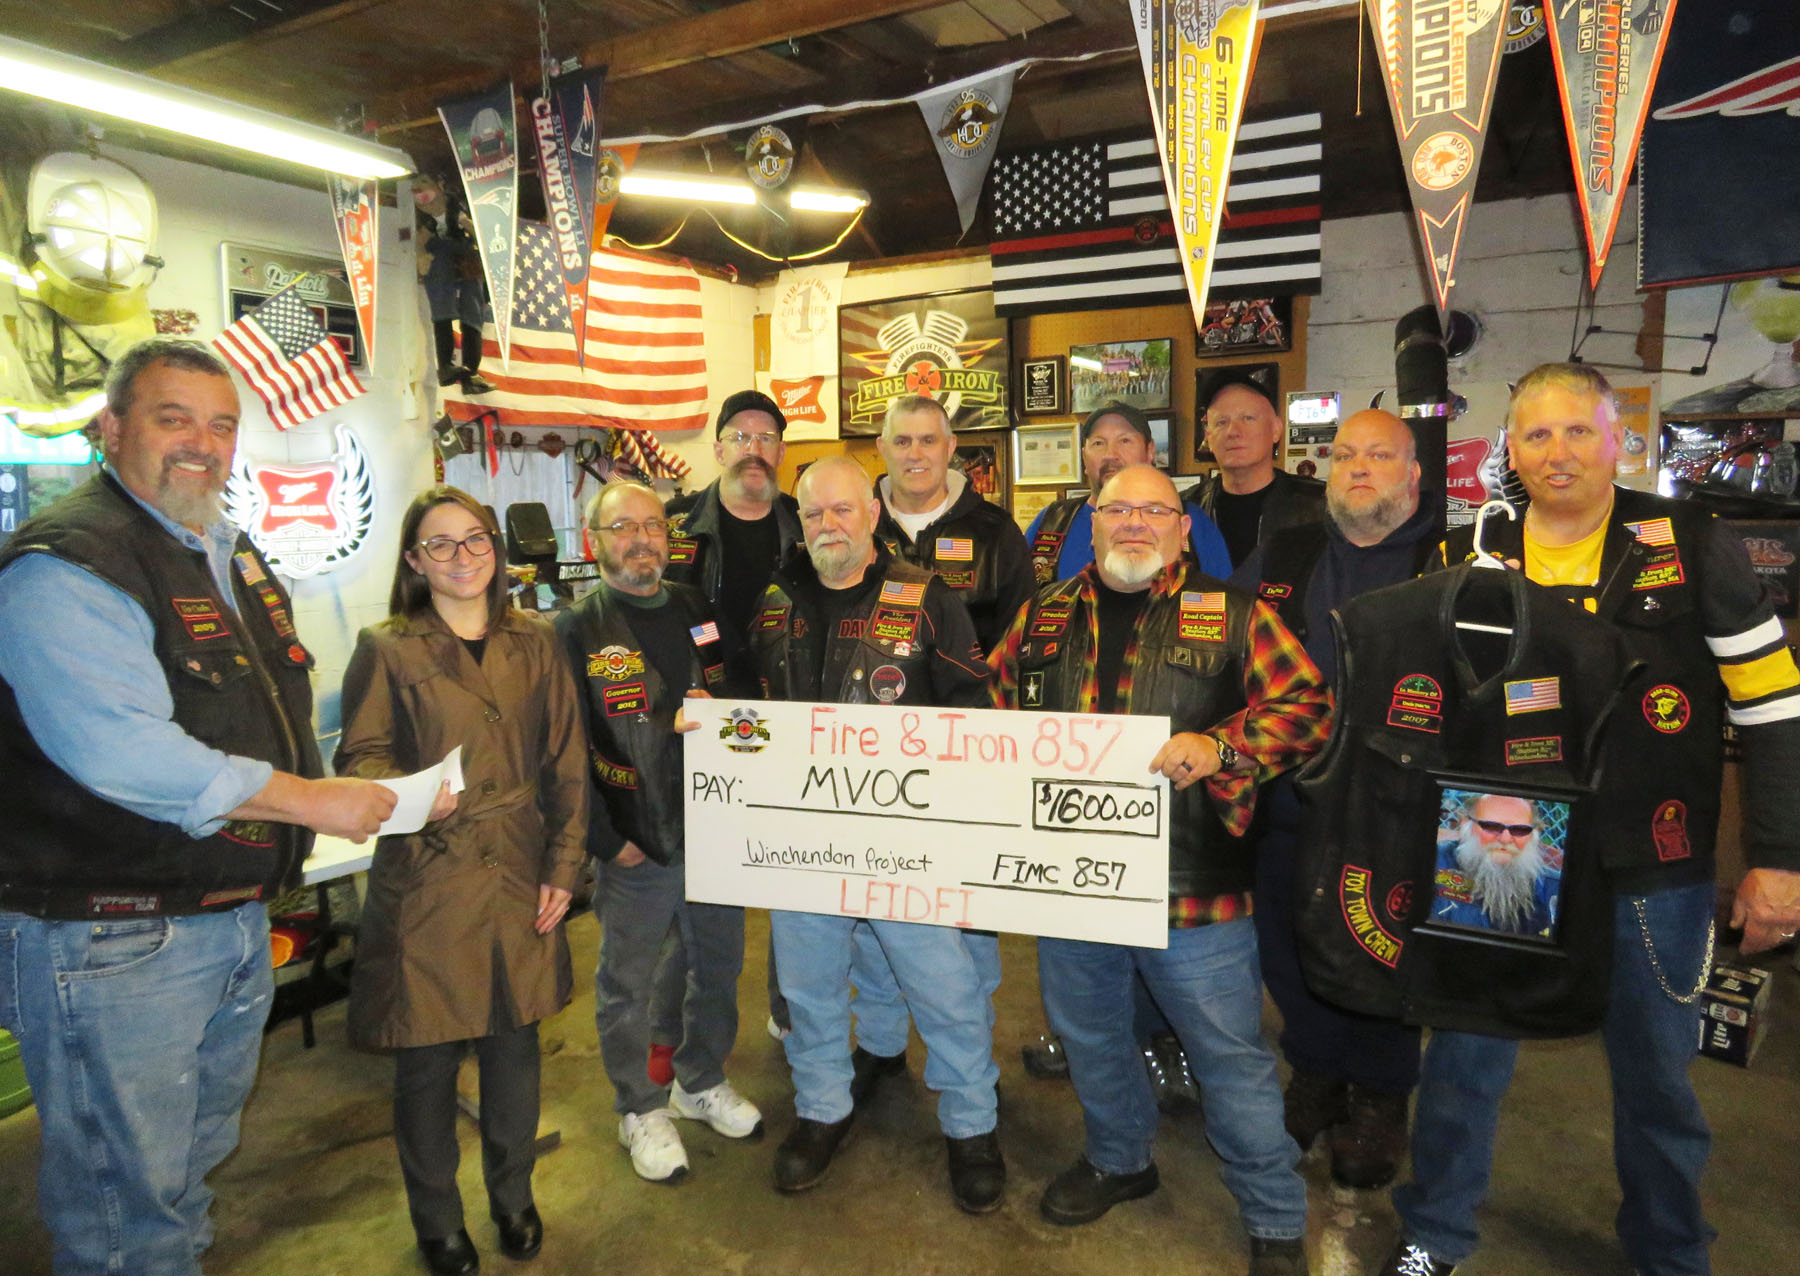 Fire & Iron donates fundraiser proceeds to MVOC